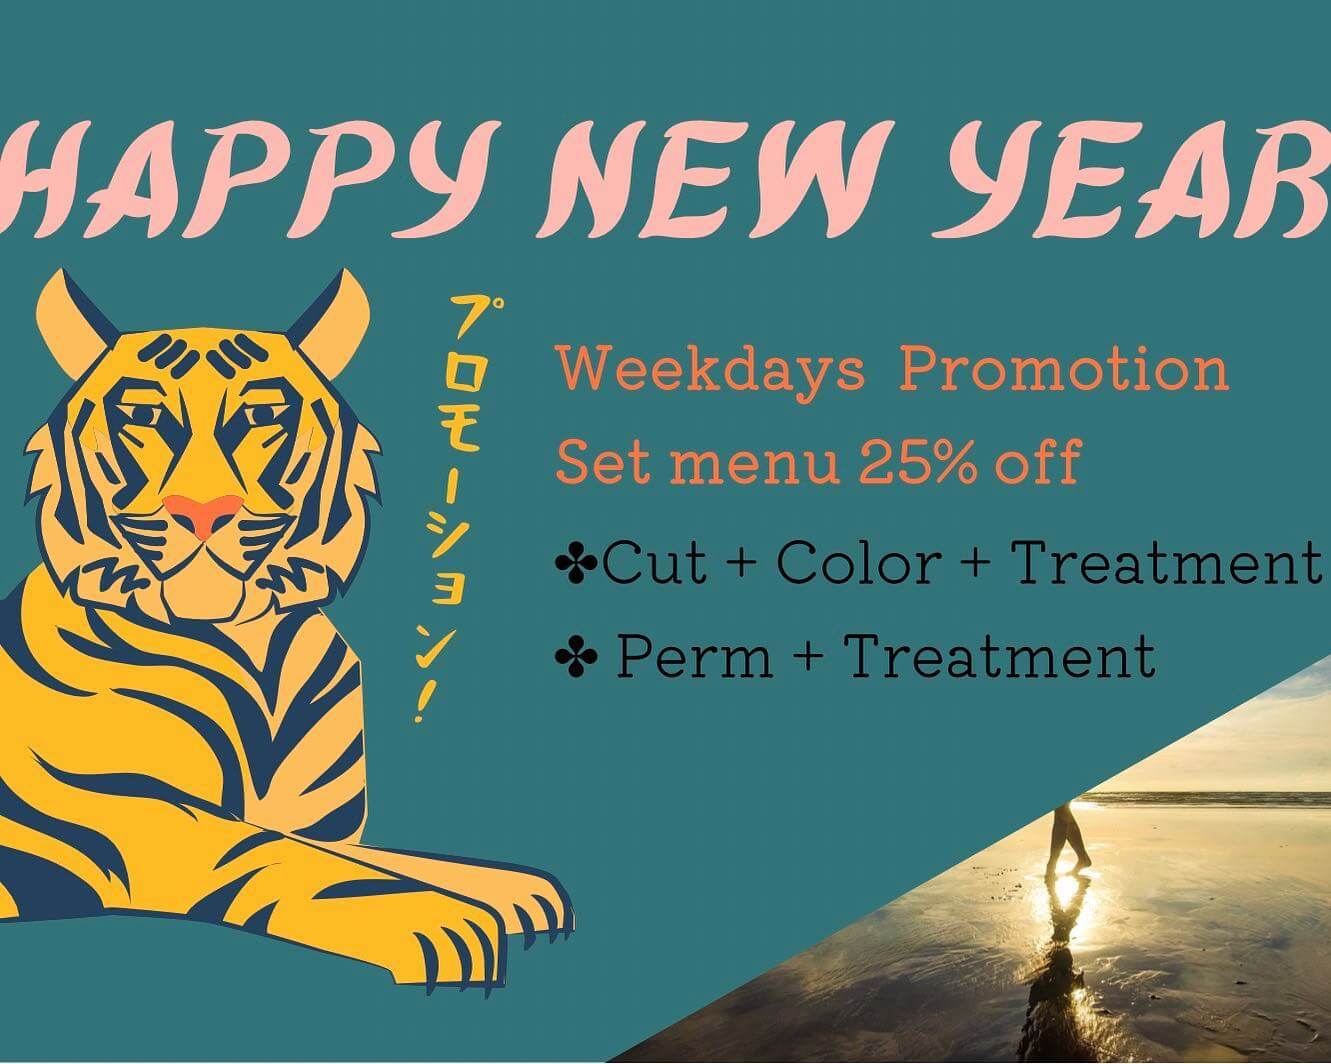 🐅Weekdays Promotion on January 🐅  25% off set menu️  Cut + Color + Treatment  Perm + Treatment  …………………………
ร้าน Hair Room Sora 299/7 ชั้น1, Sukhumvit Living Town, ซอยสุขุมวิท21(อโศก)
️ 02-169-1622  #Hairroomsora #Hairroomsorabangkok #🤖 #Hairstyle #Sukhumvitlivingtown #sukhumvit21 #Japanesesalon #DigitalPerm #デジパ #ヘアールームソラ #fashioncolor #ร้านซาลอนญี่ปุ่น #ซาลอน #ทำผมรับปริญญา #ทำผมออกงาน #รับทำผม #ดัดดิจิตอล #ยืดผม #ย้อมผม #Repost